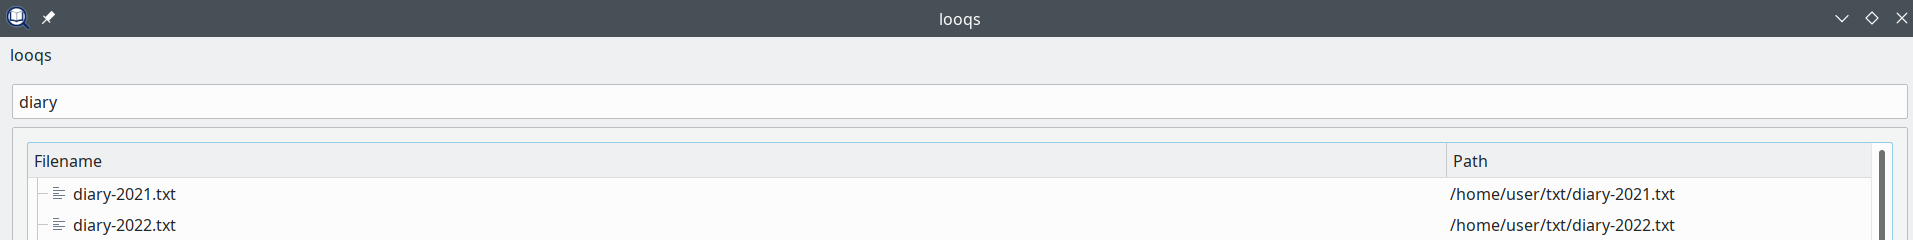 Screenshot looqs results